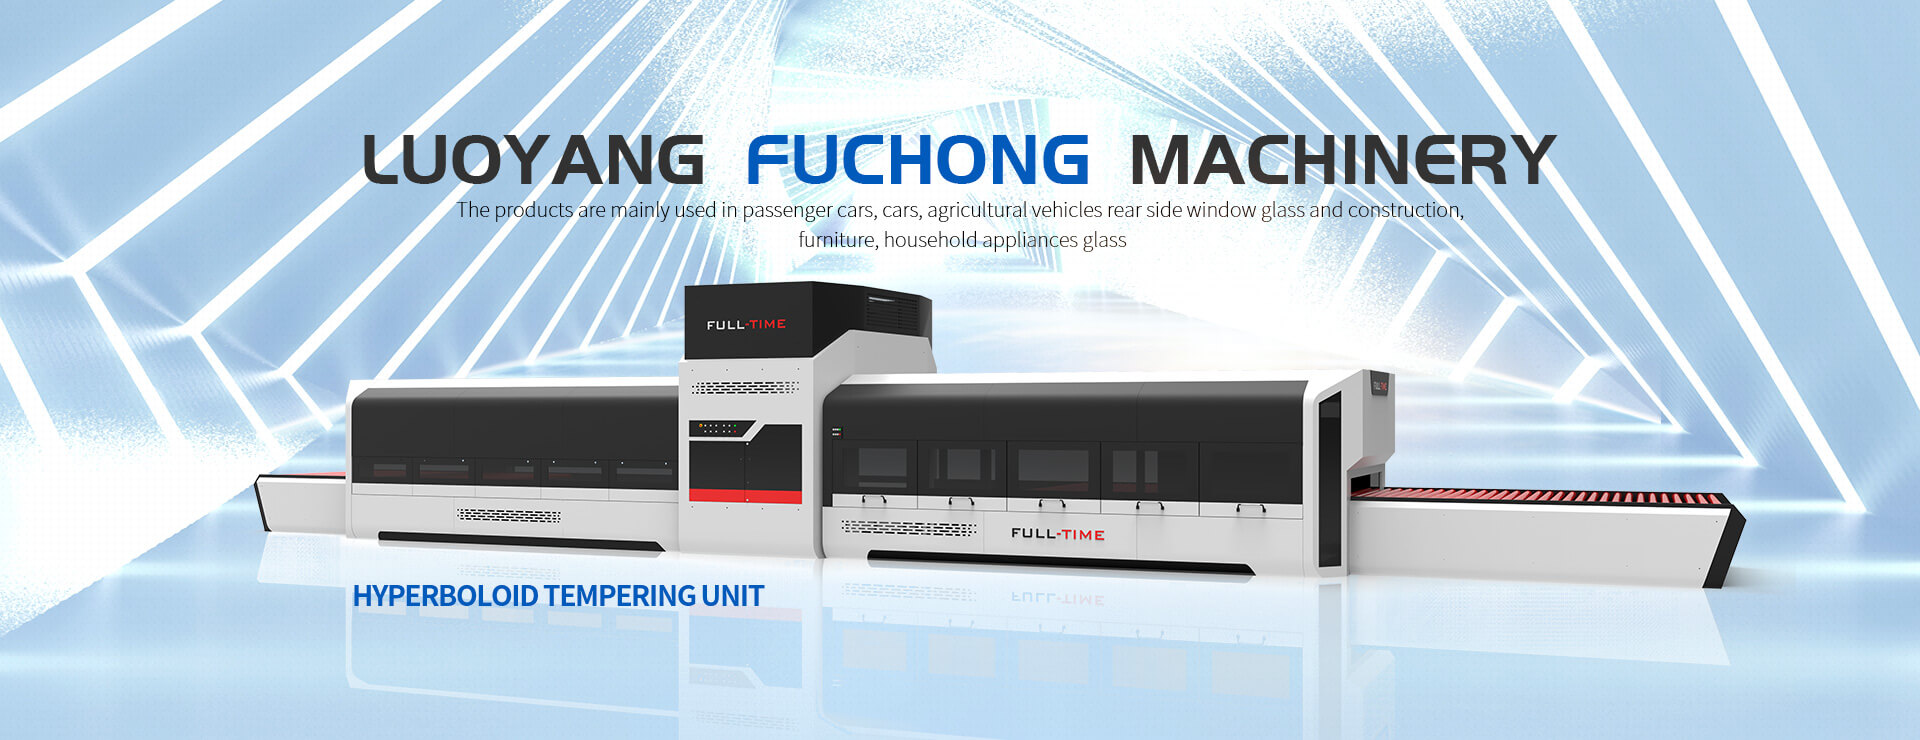 LUOYANG FUCHONG MACHINERY CO., LTD.